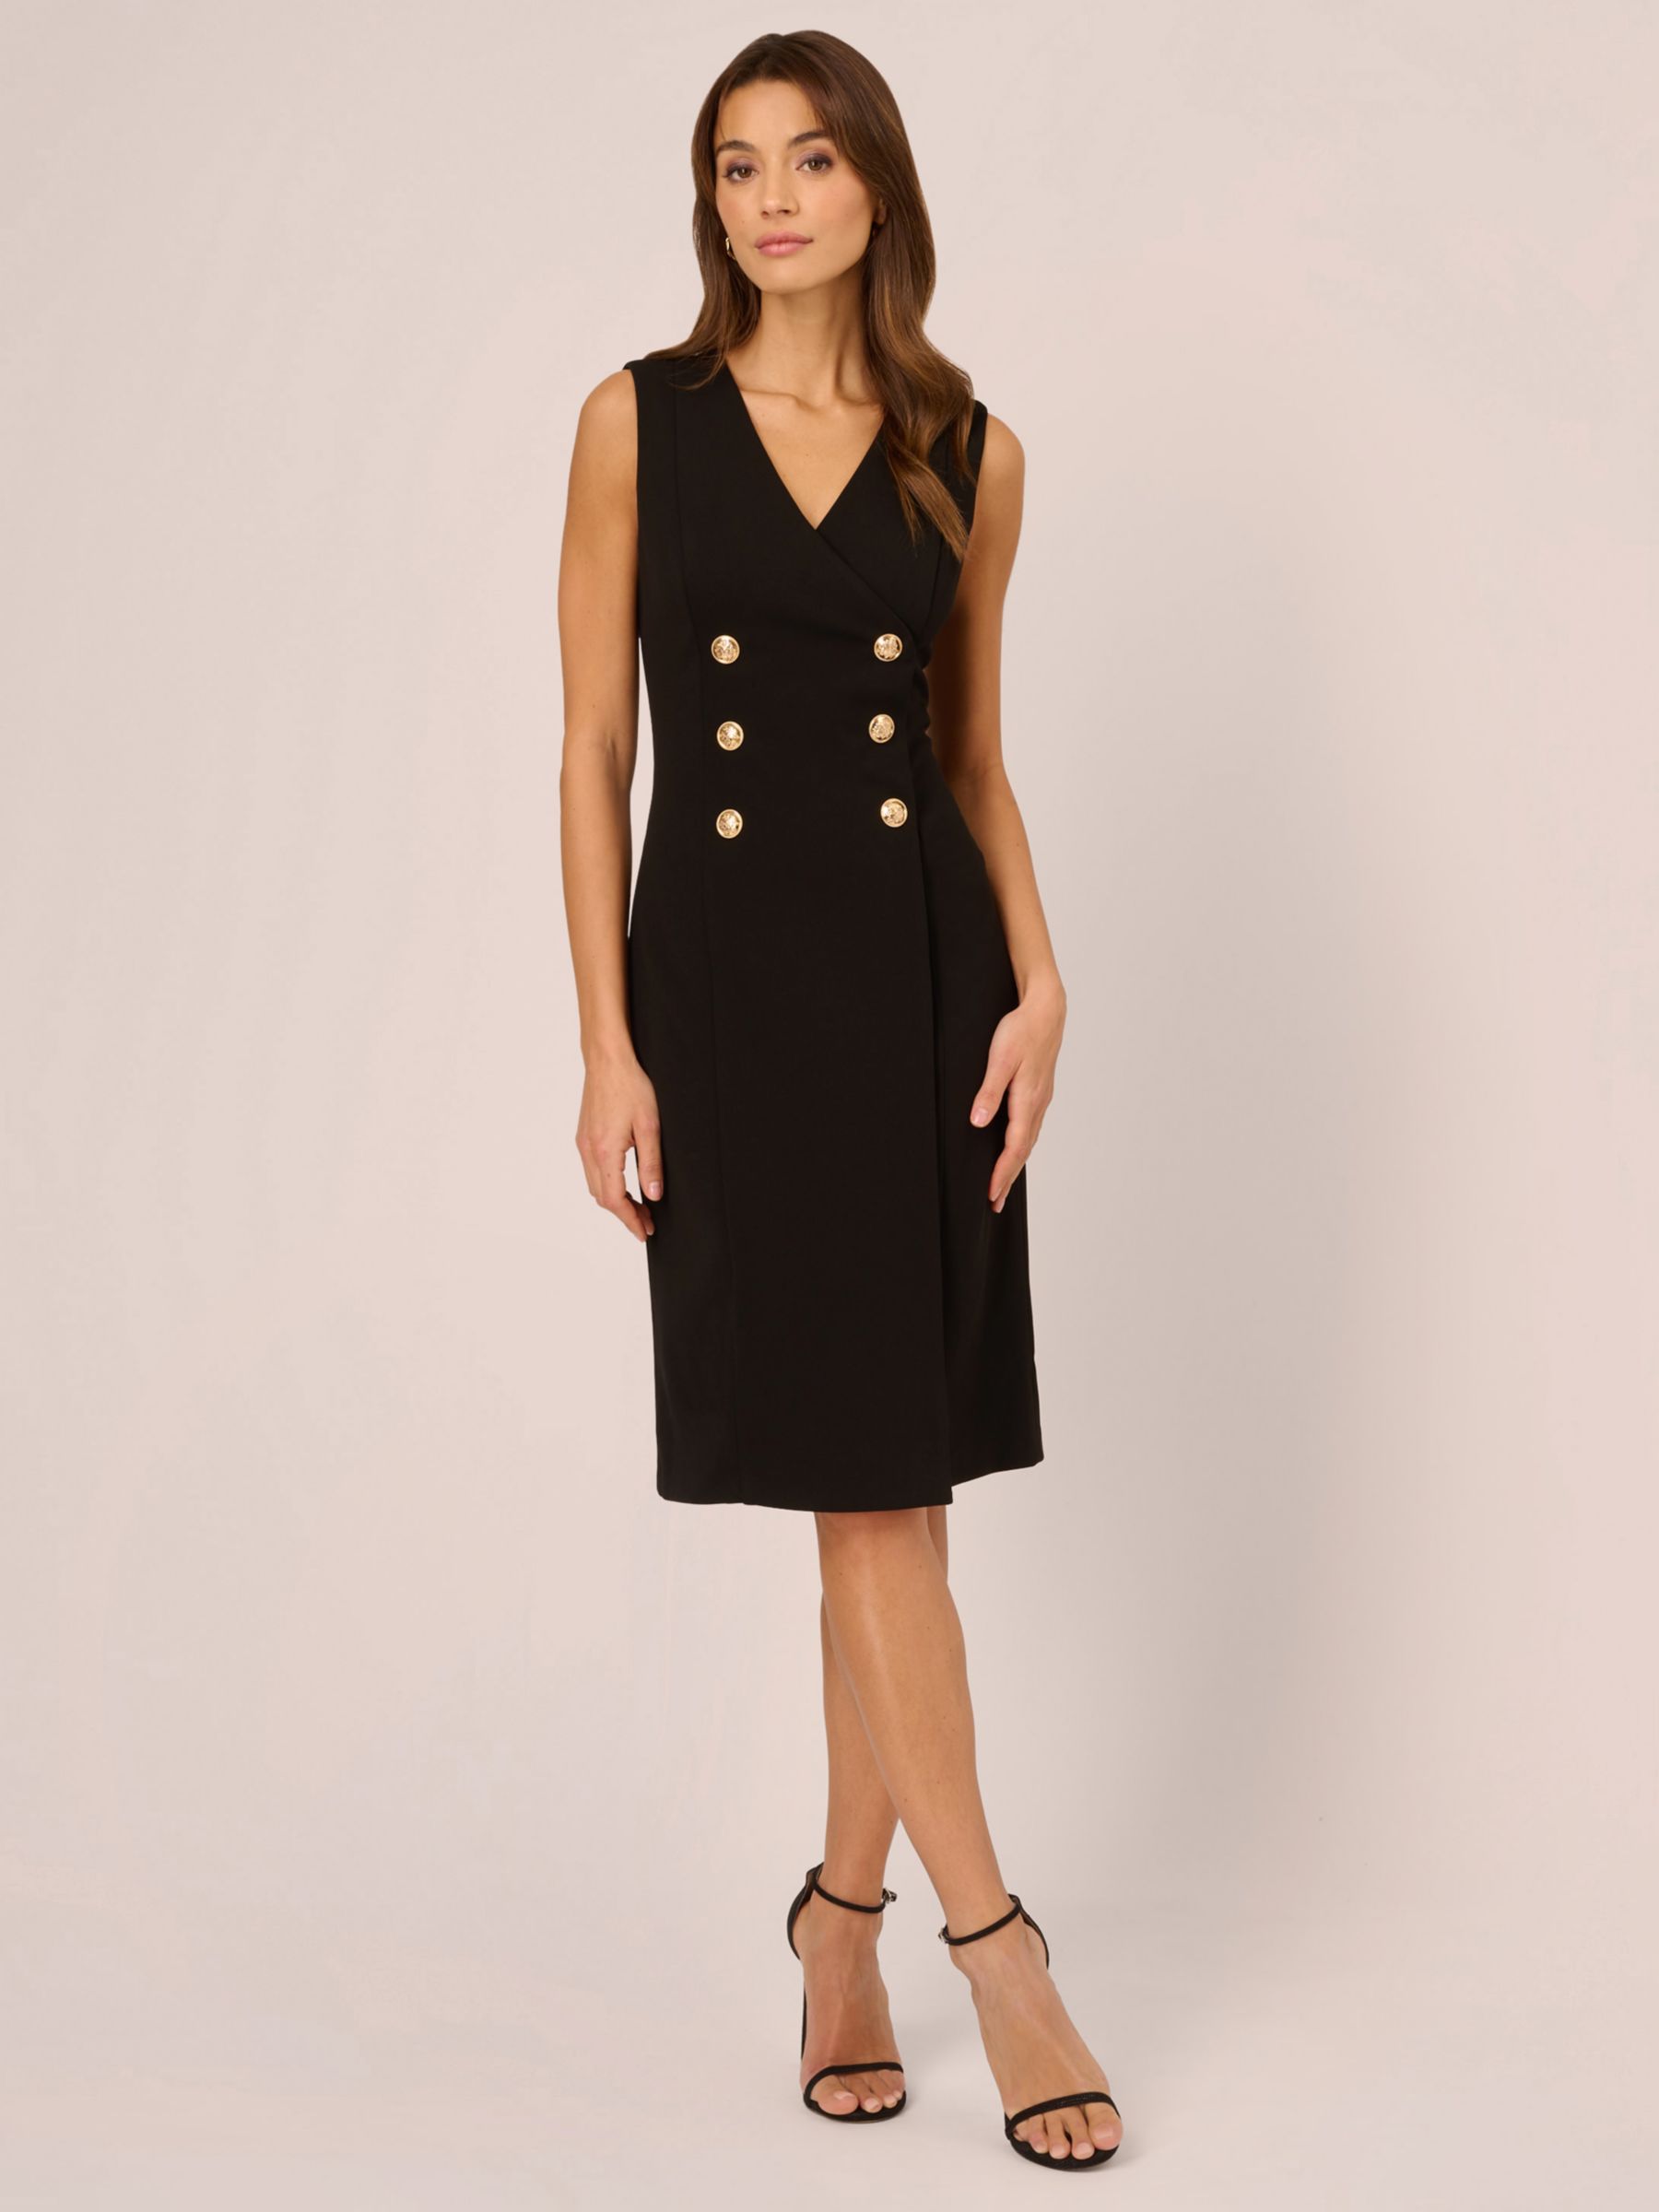 Adrianna Papell Knit Crepe Midi Dress, Black at John Lewis & Partners